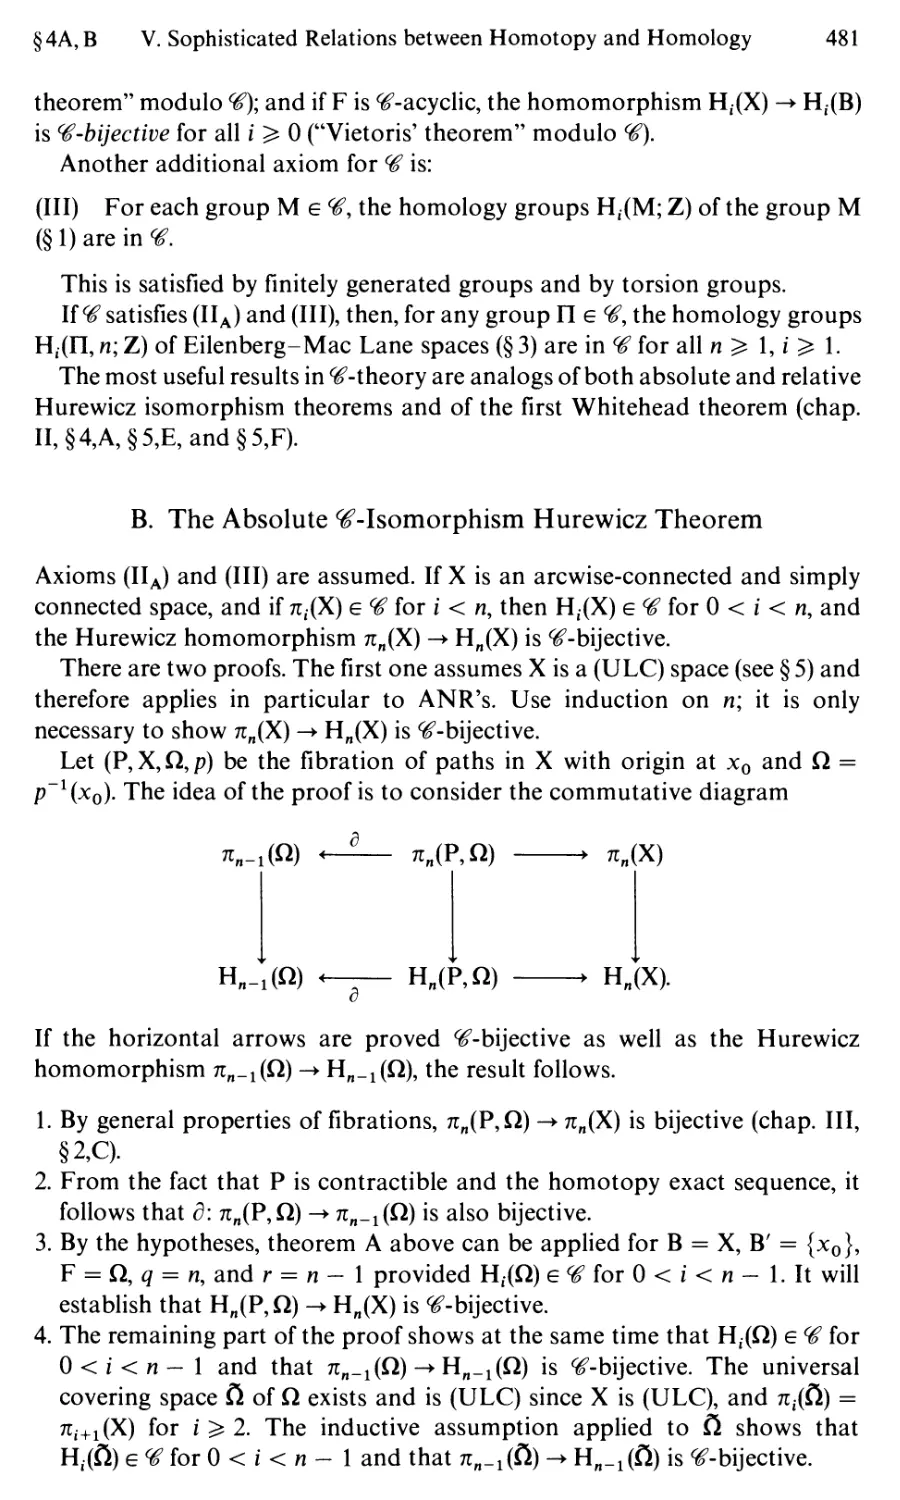 B. The Absolute C-Isomorphism Hurewicz Theorem